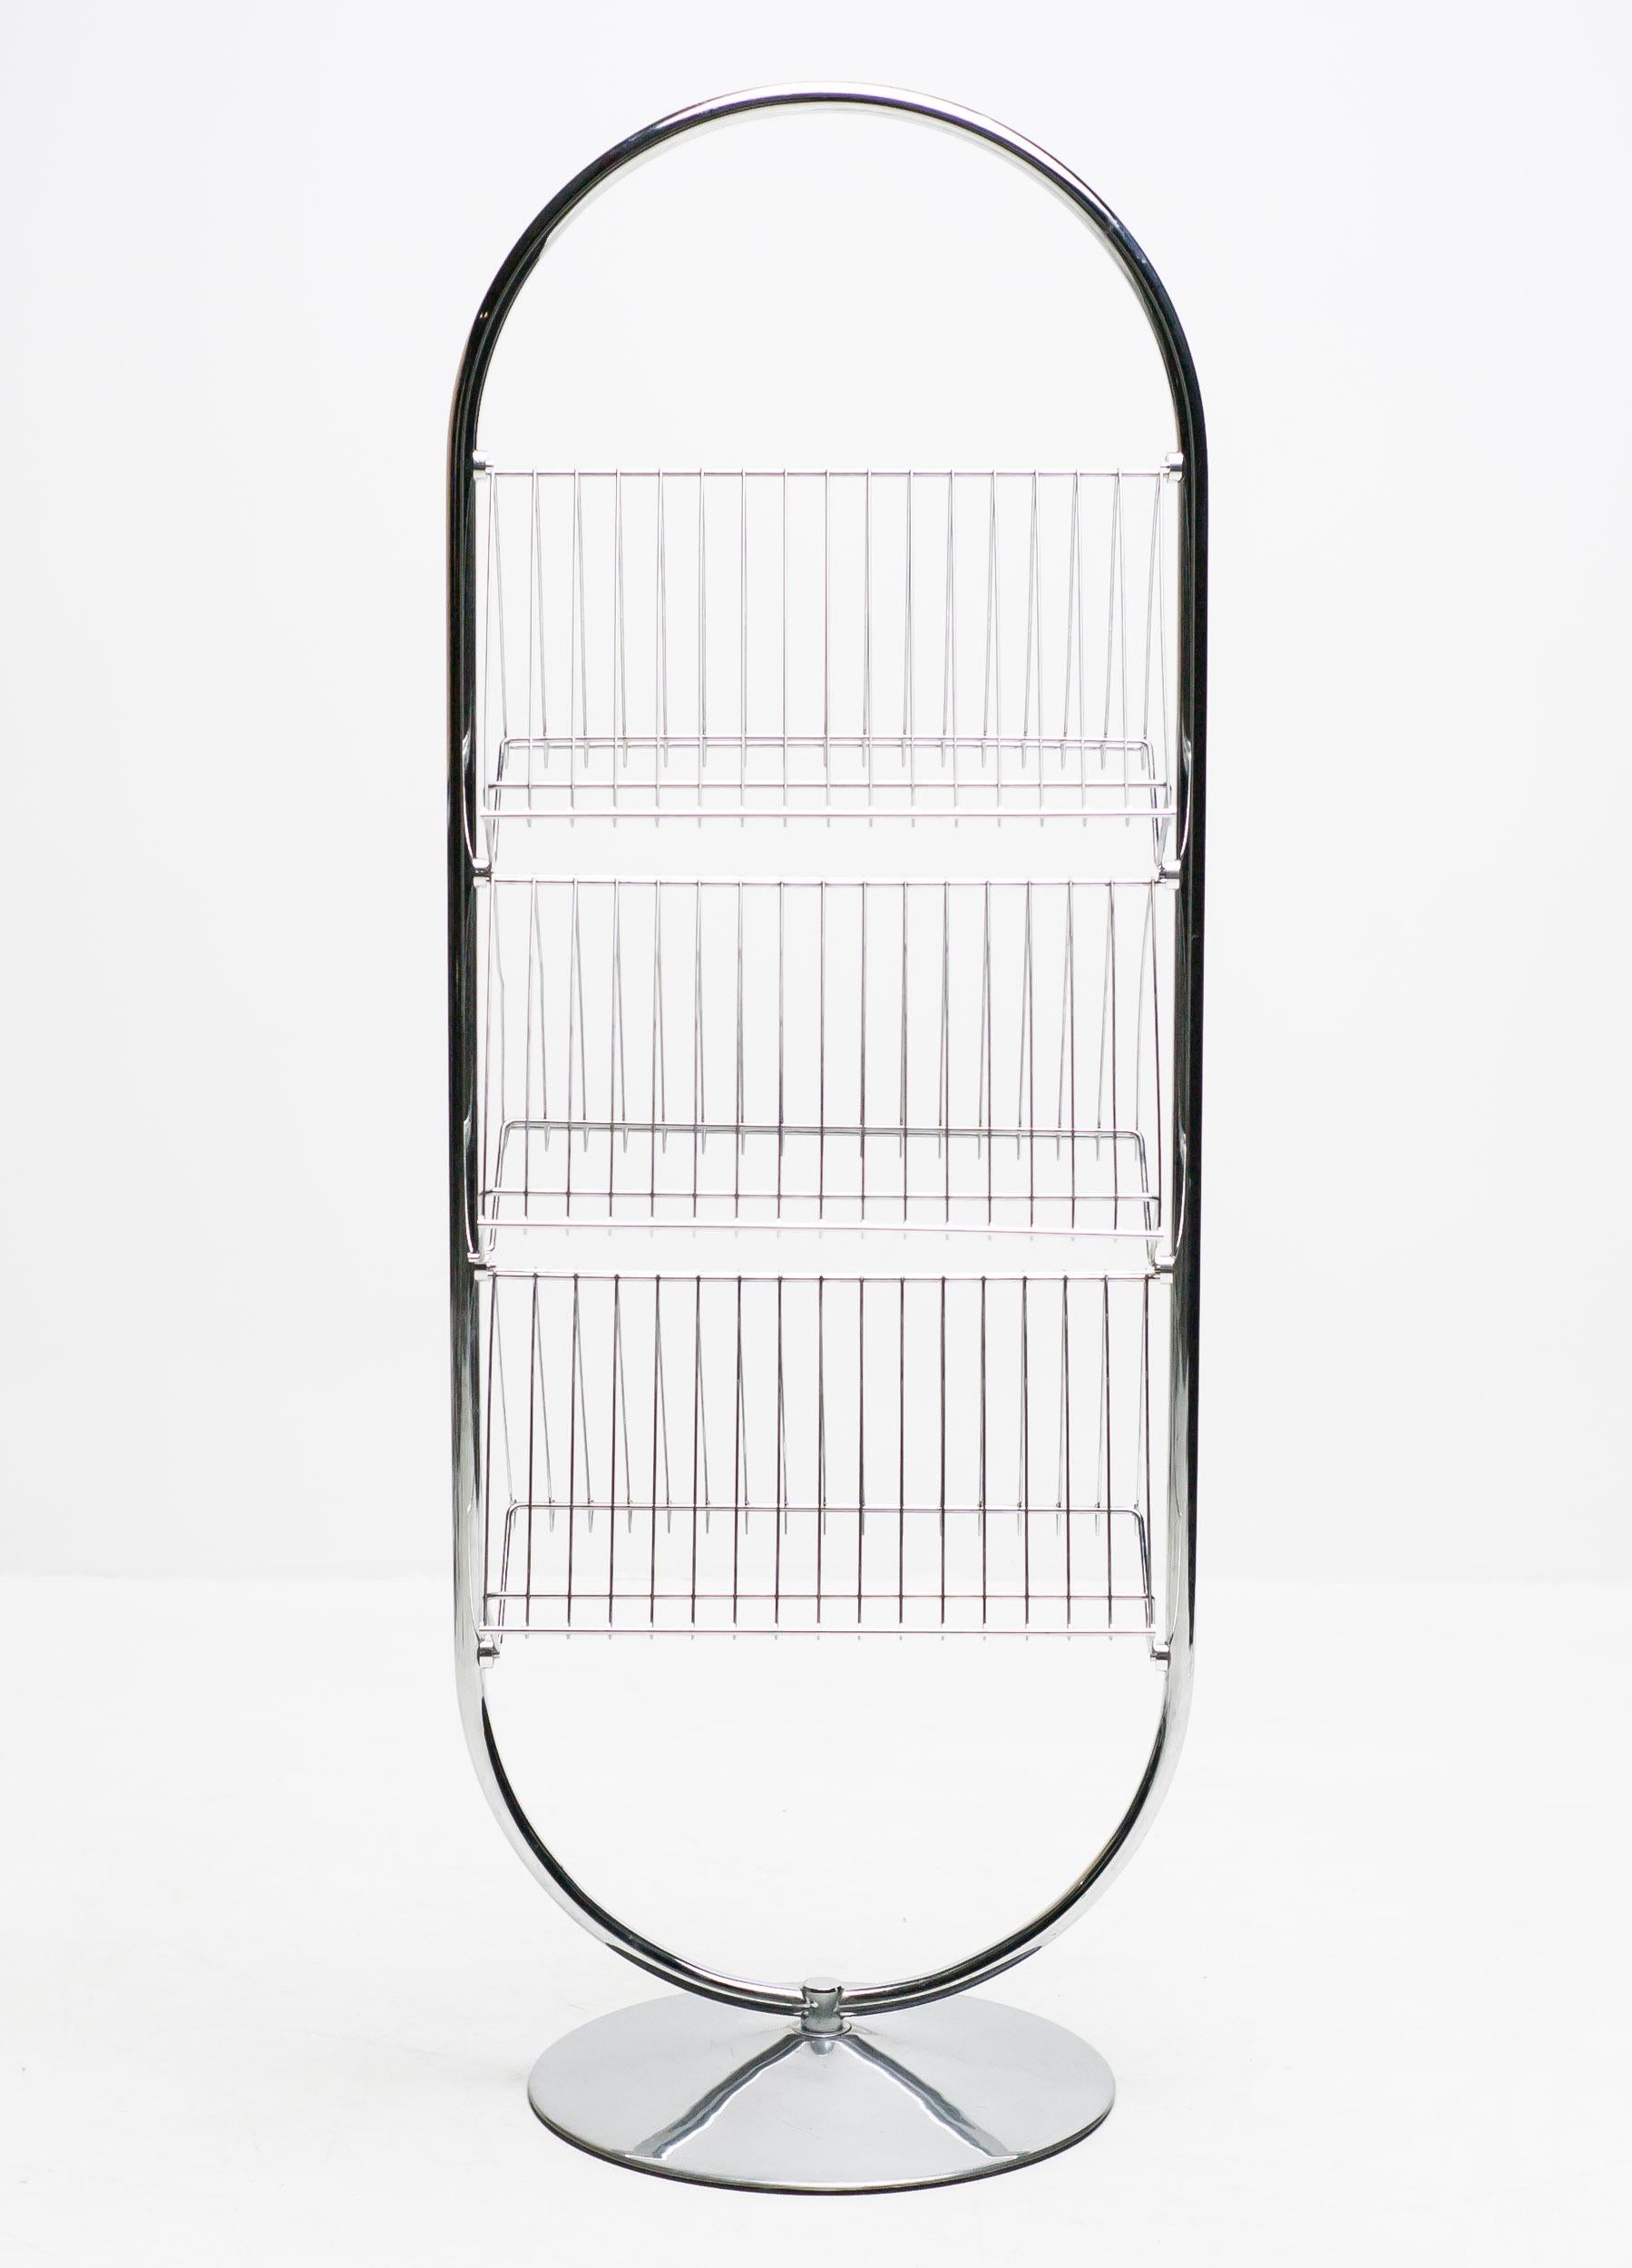 VP-Rack, double-sided display rack designed in 1973 by Verner Panton for Fritz Hansen.